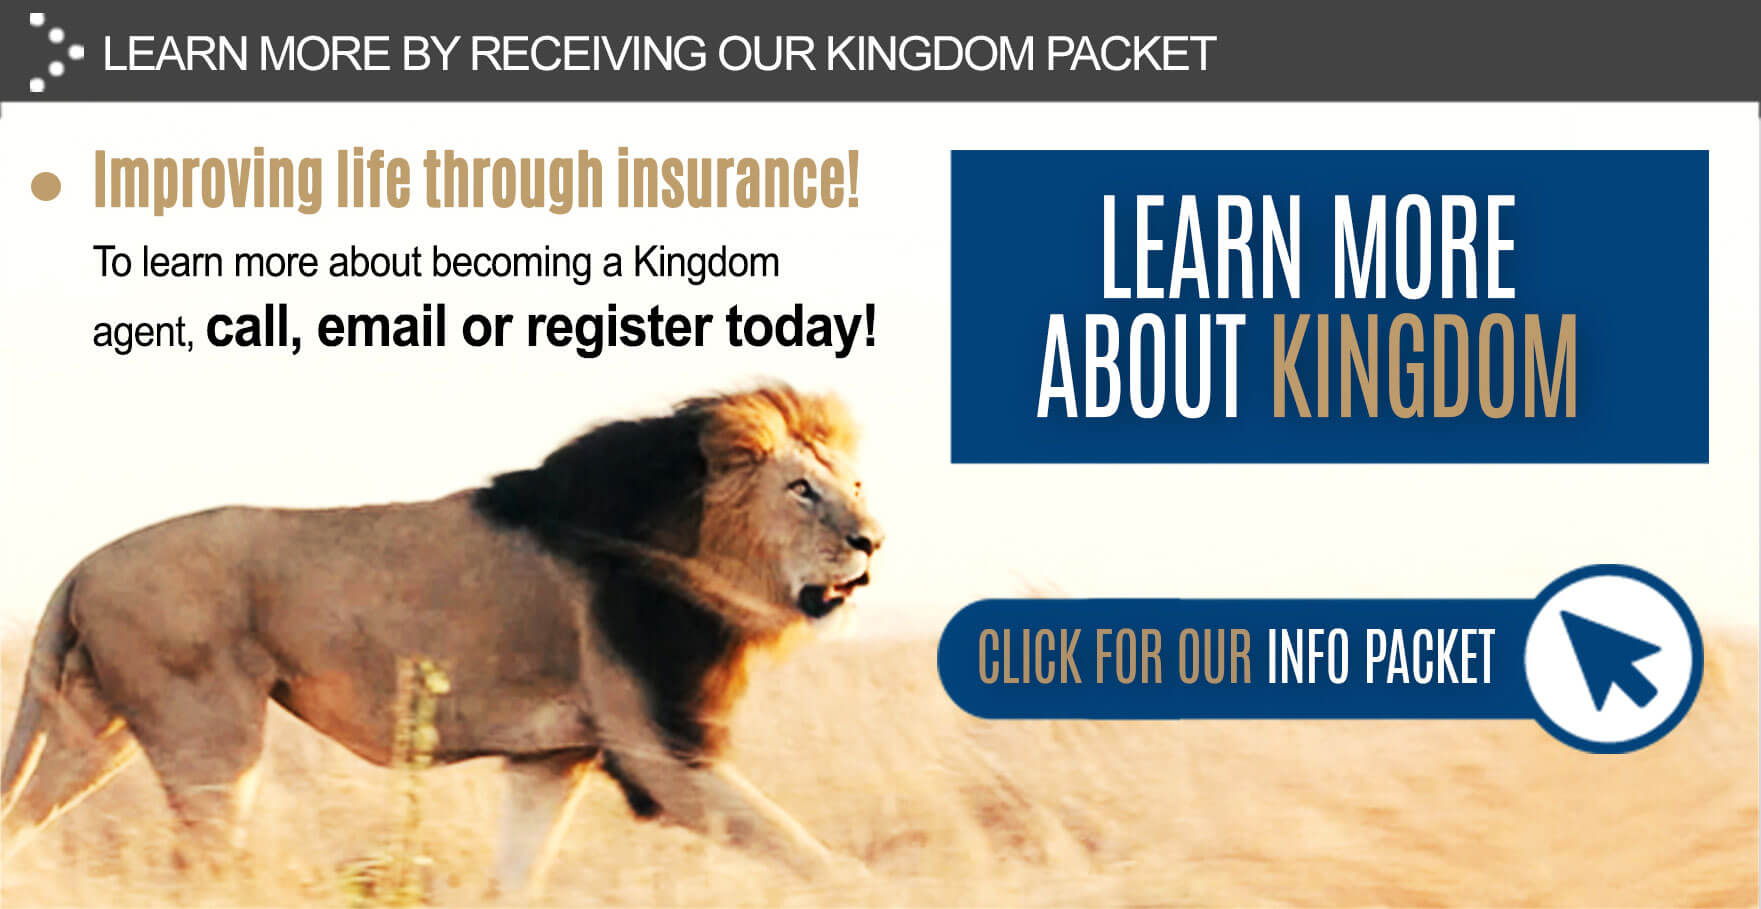 Get the Kingdom information packet!